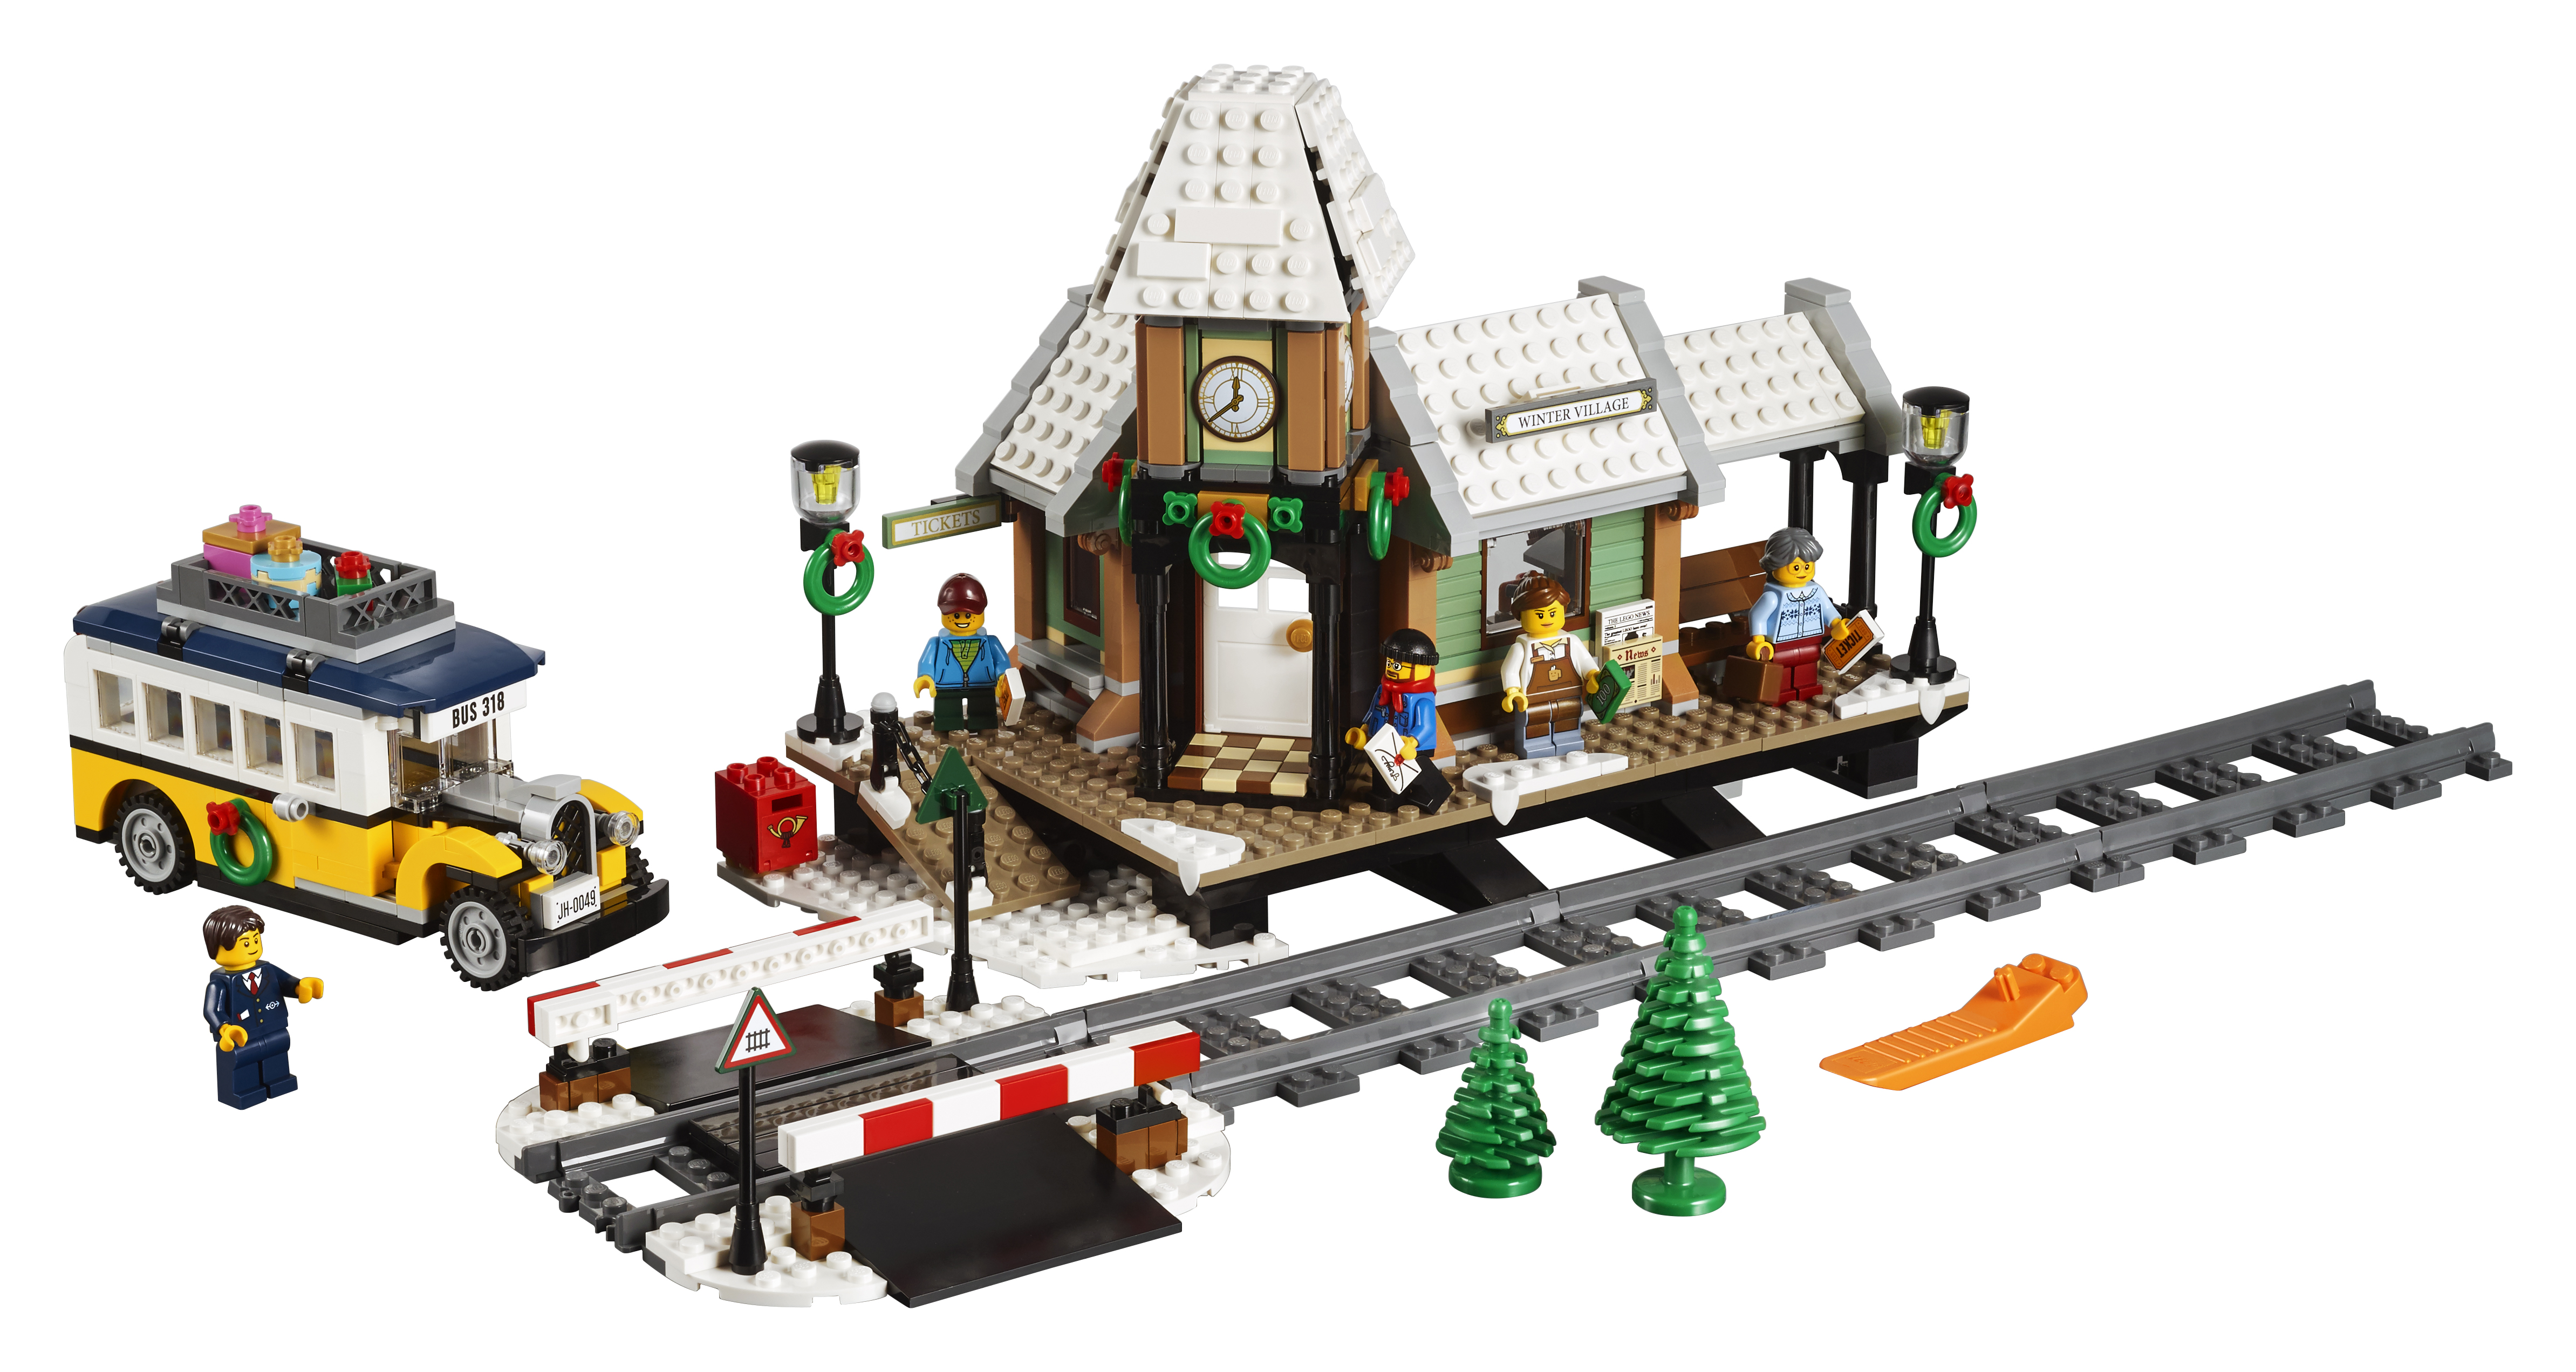 LEGO Creator Expert Winter Village Station 10259 - image 2 of 7